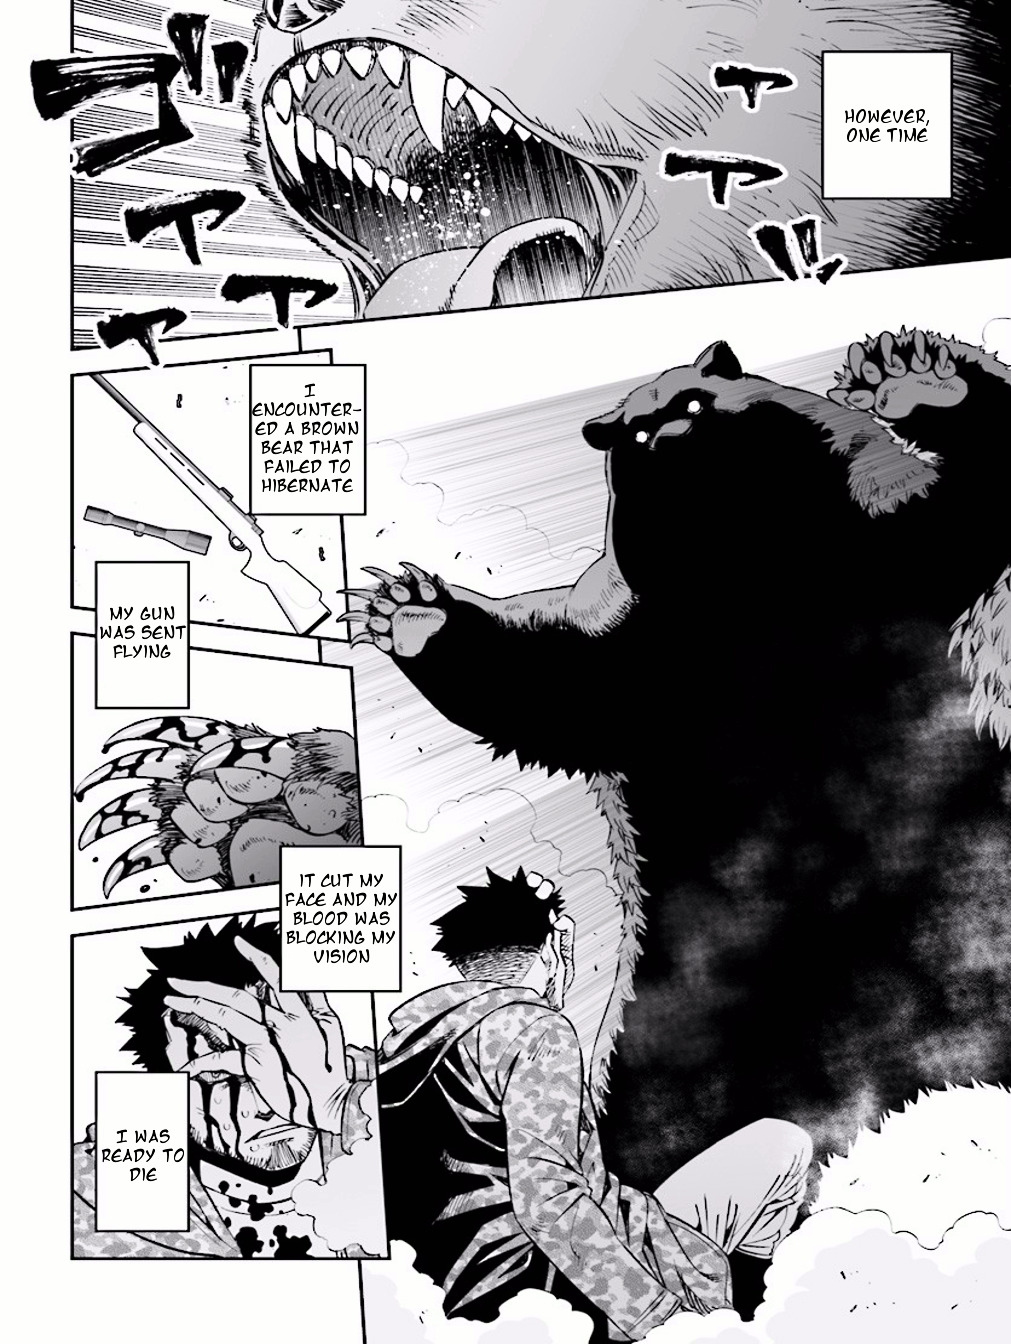 12 Beast - Page 2